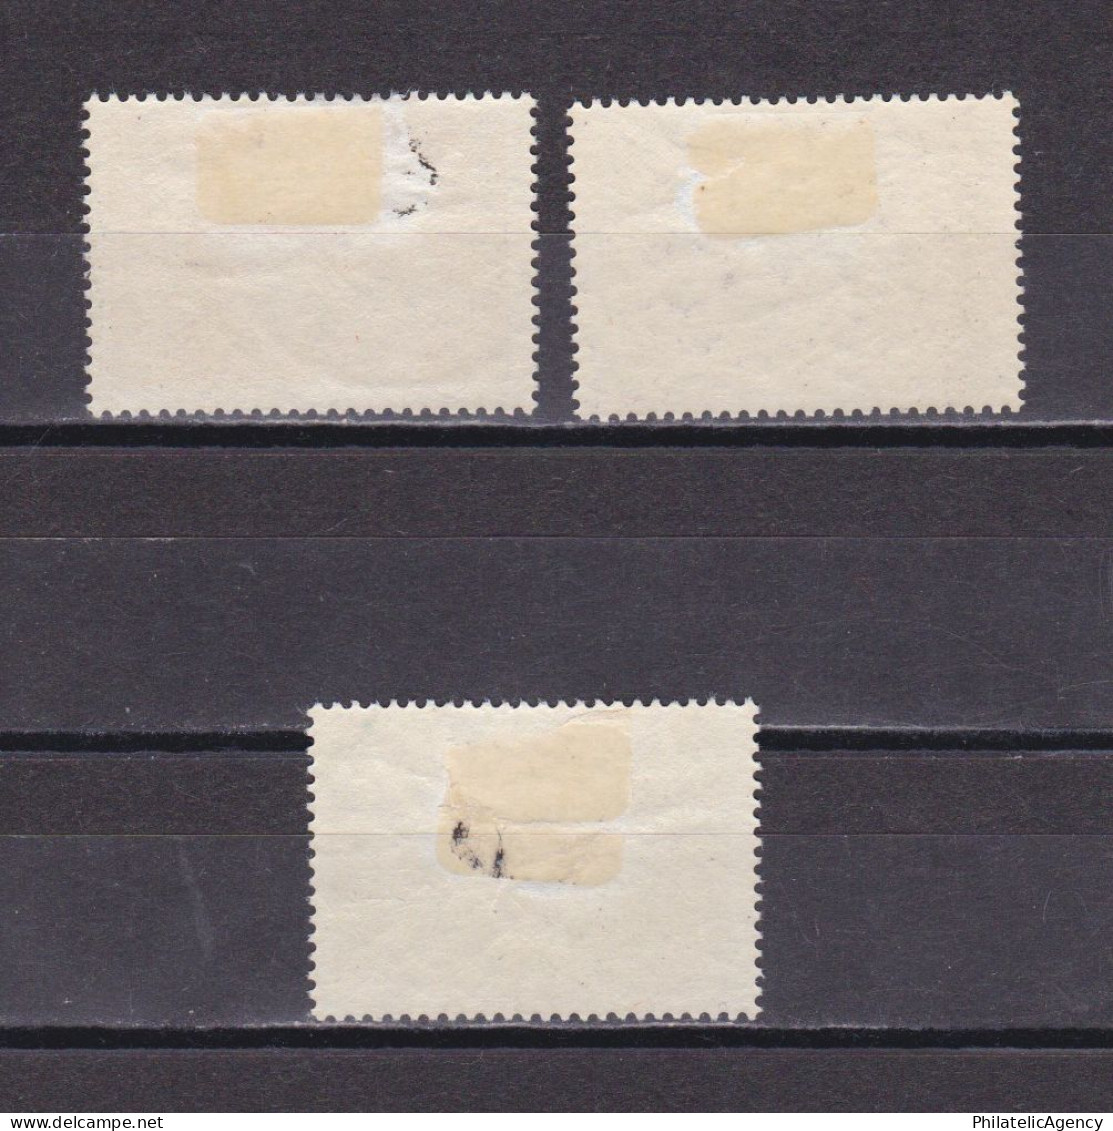 FINLAND 1953, Sc# B120-B122, Semi-Postal, Wild Animals,  MH - Nuevos